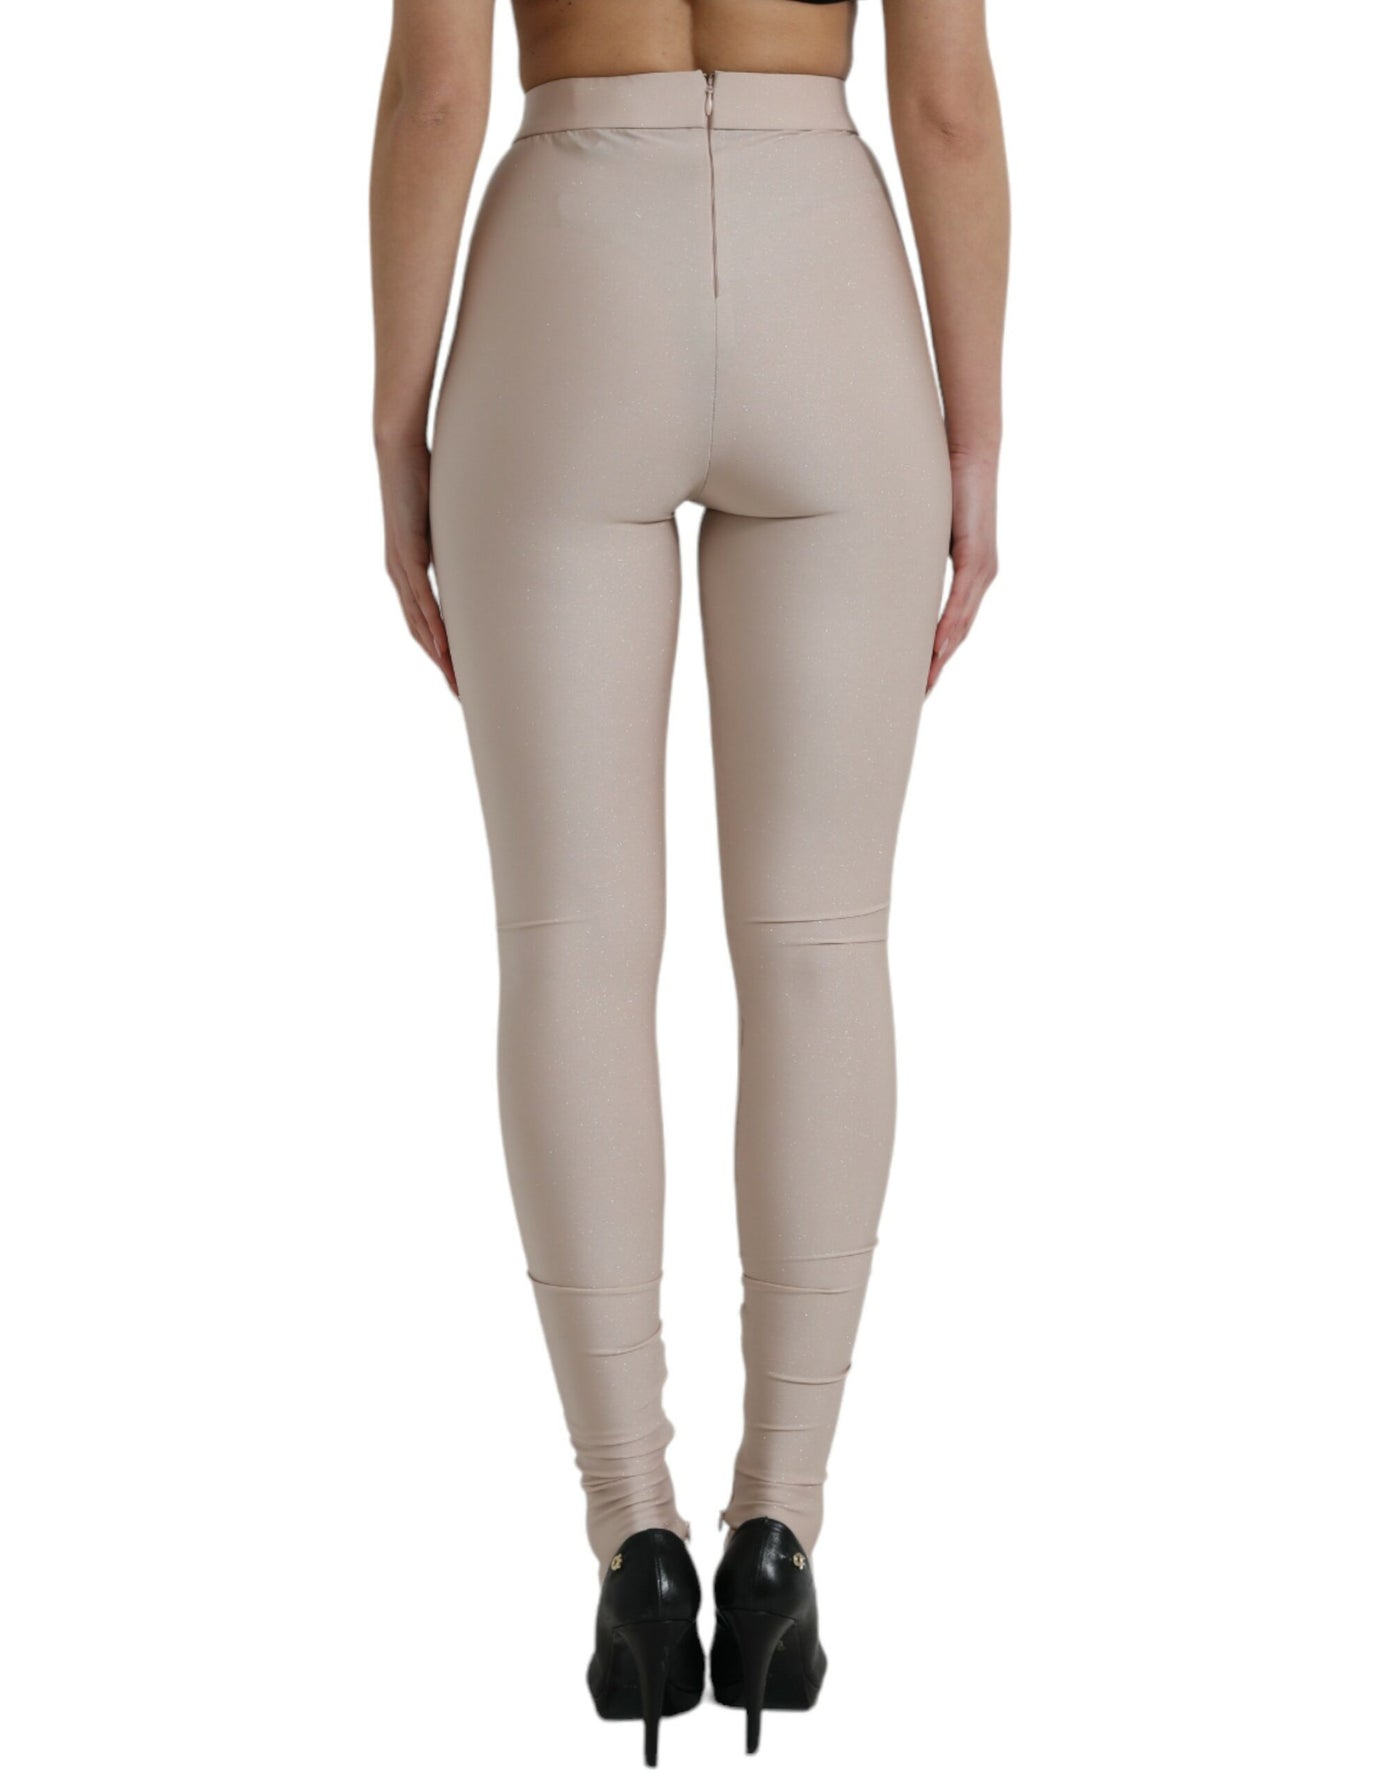 Dolce & Gabbana Beige Nylon Stretch Slim Leggings Pants